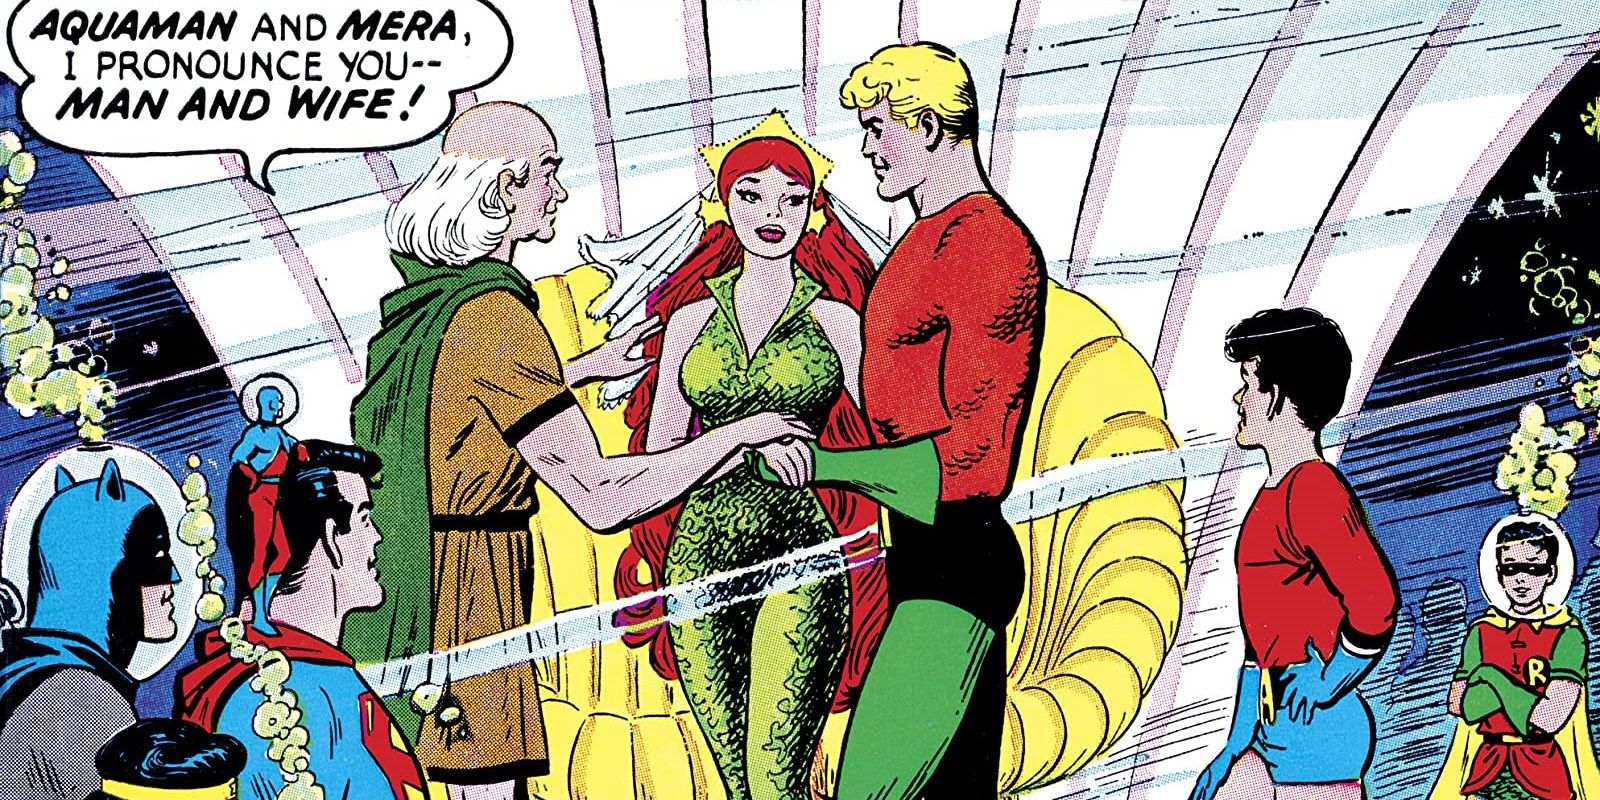 Aquaman marries Mera in DC Comics